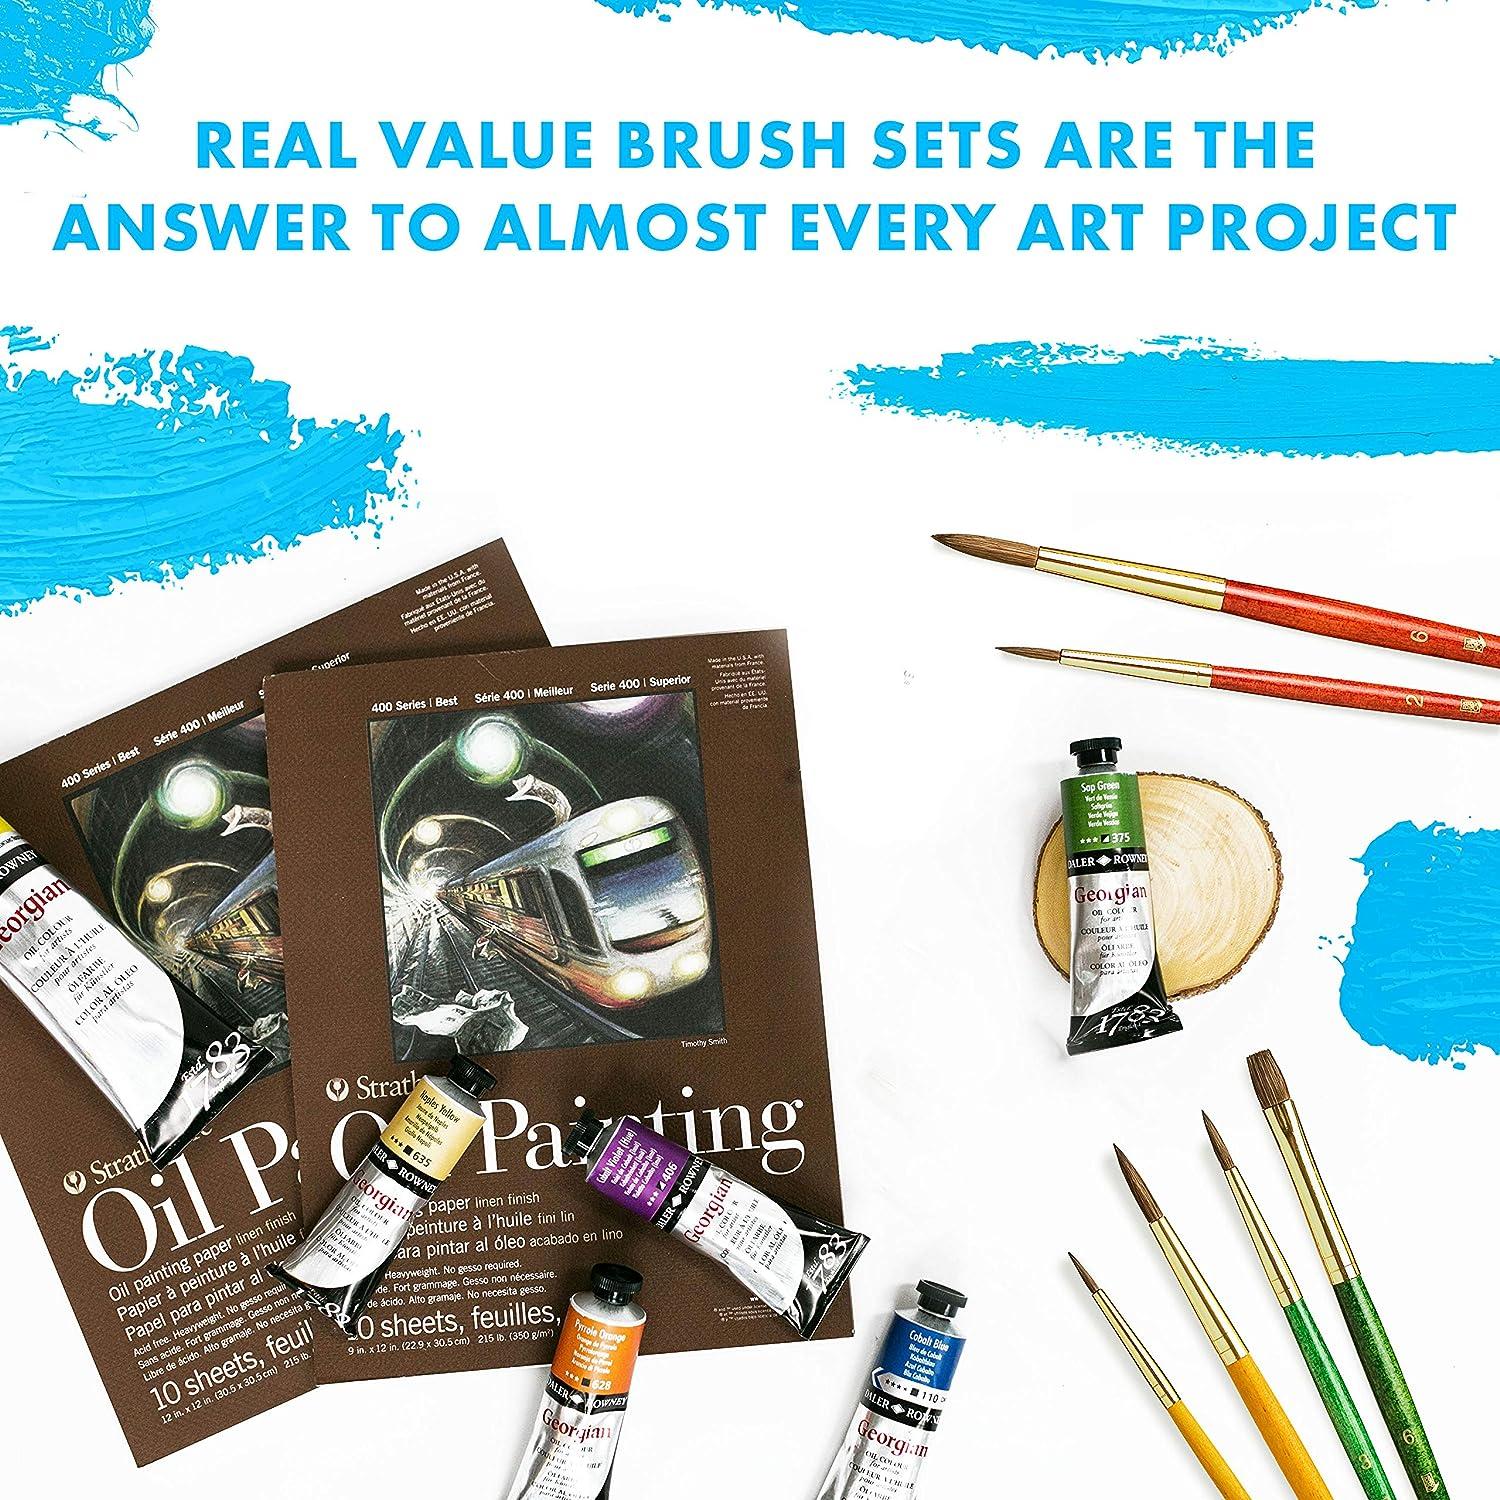 Princeton Brush Real Value 3-Brush Set